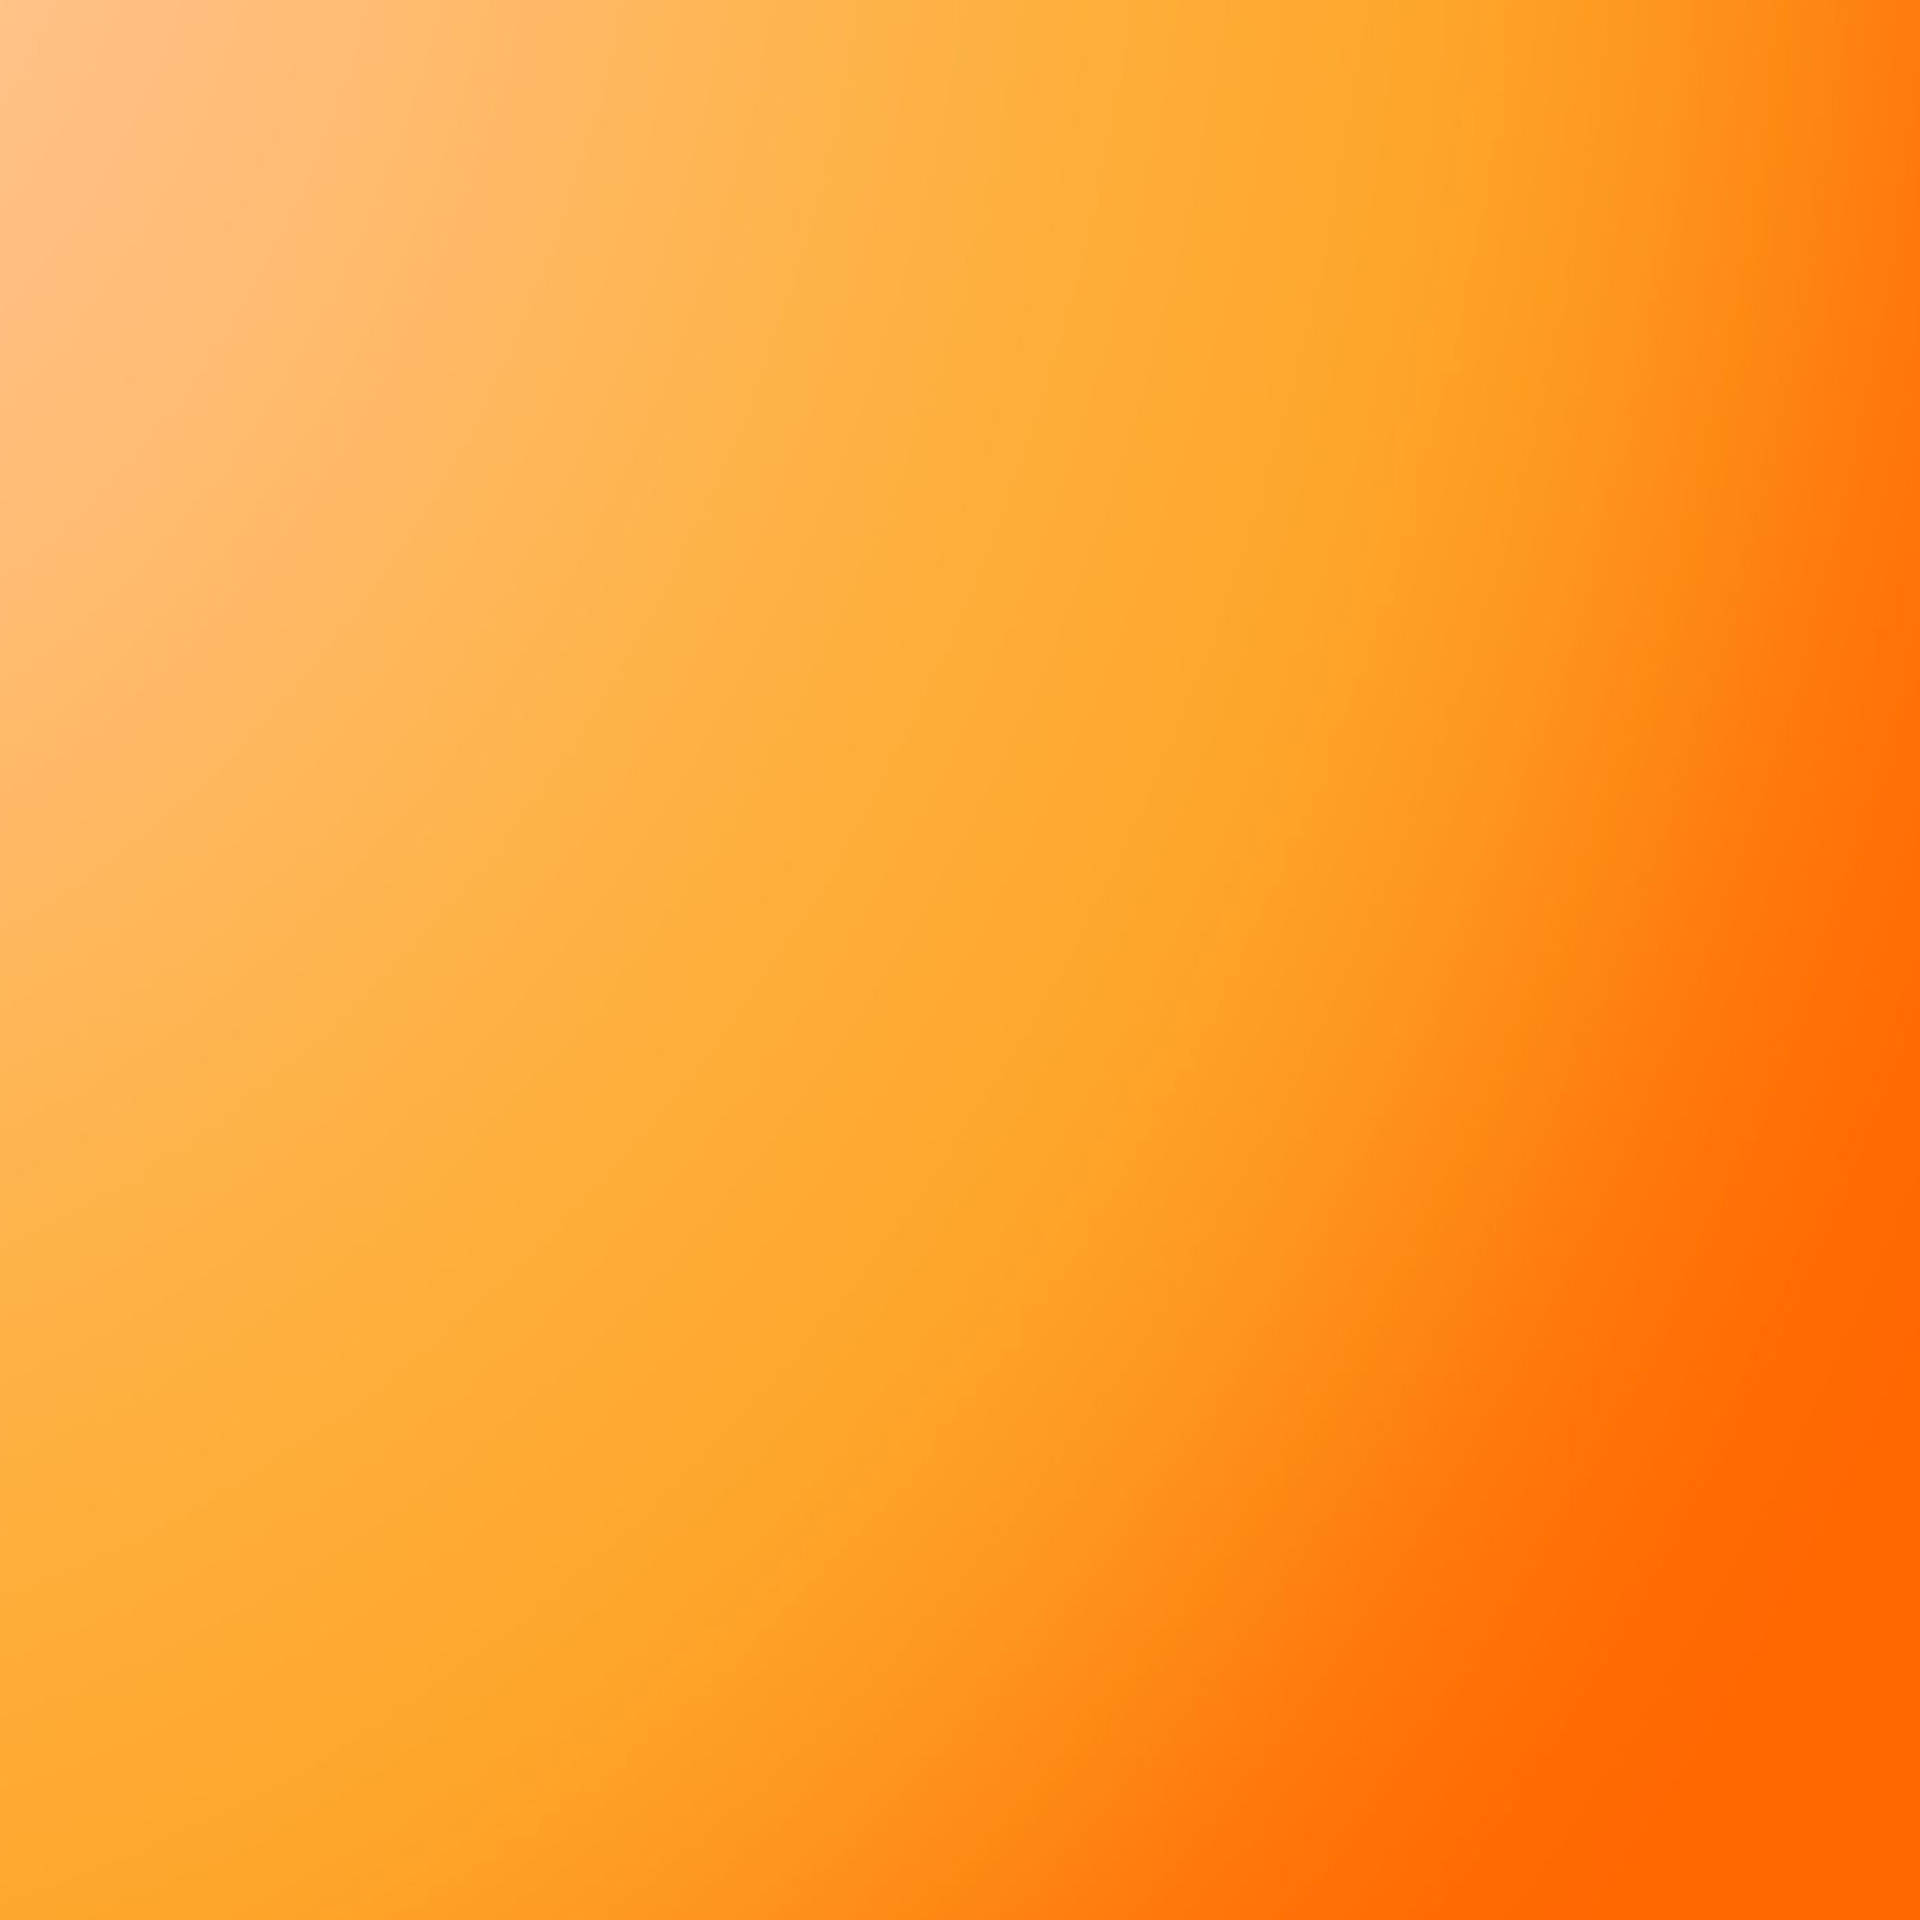 Solid Orange 5000 X 5000 Wallpaper